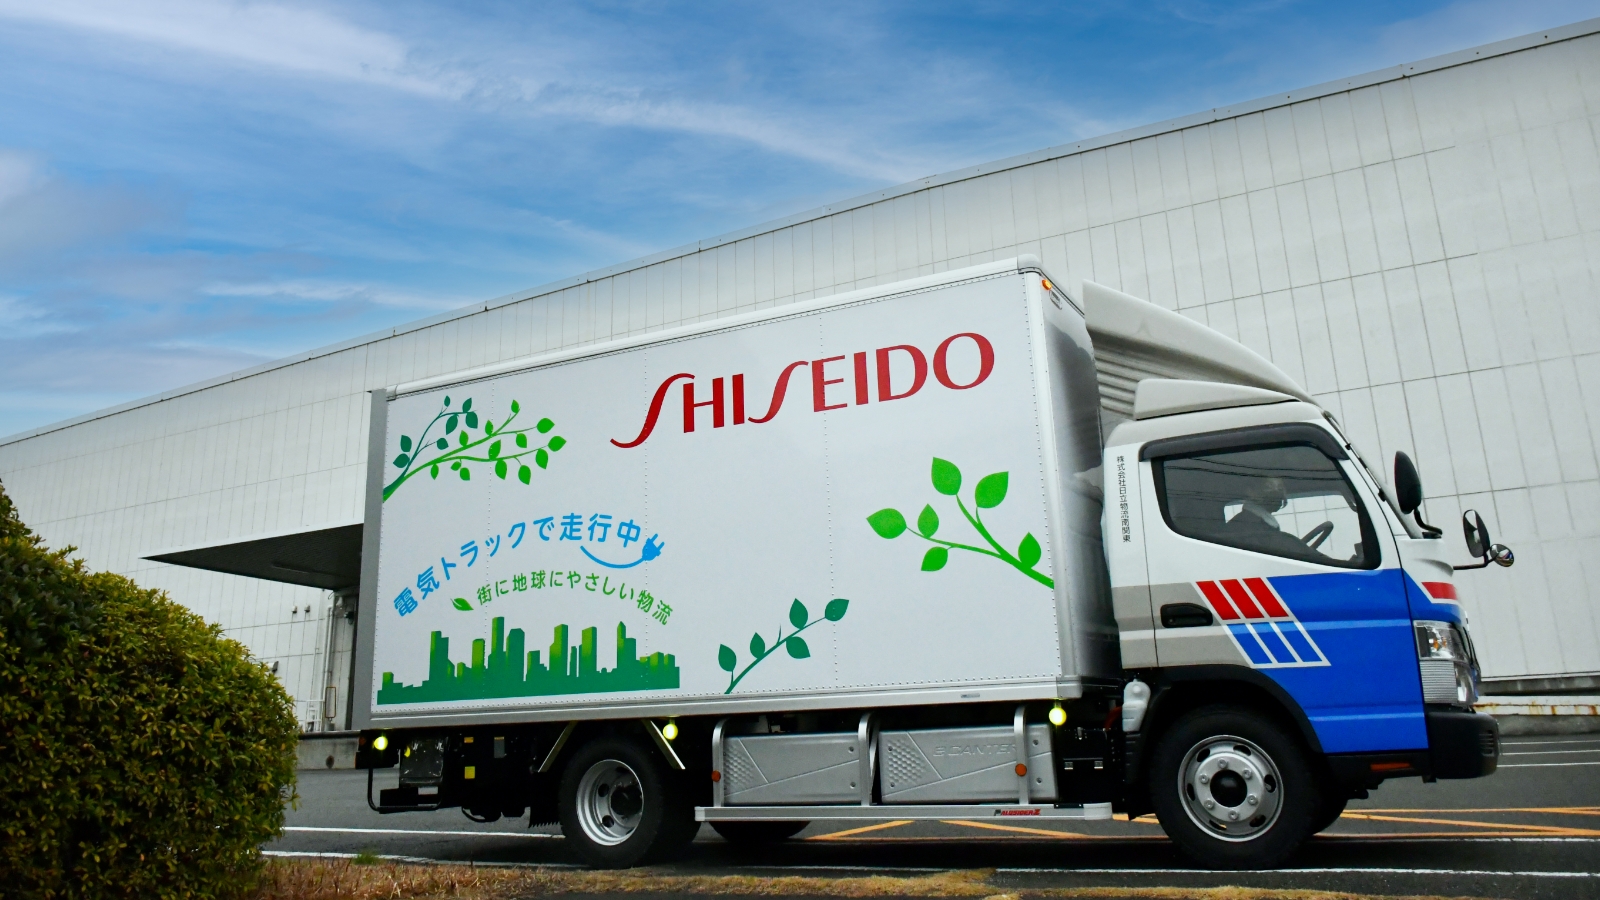 Shiseido’s EV truck